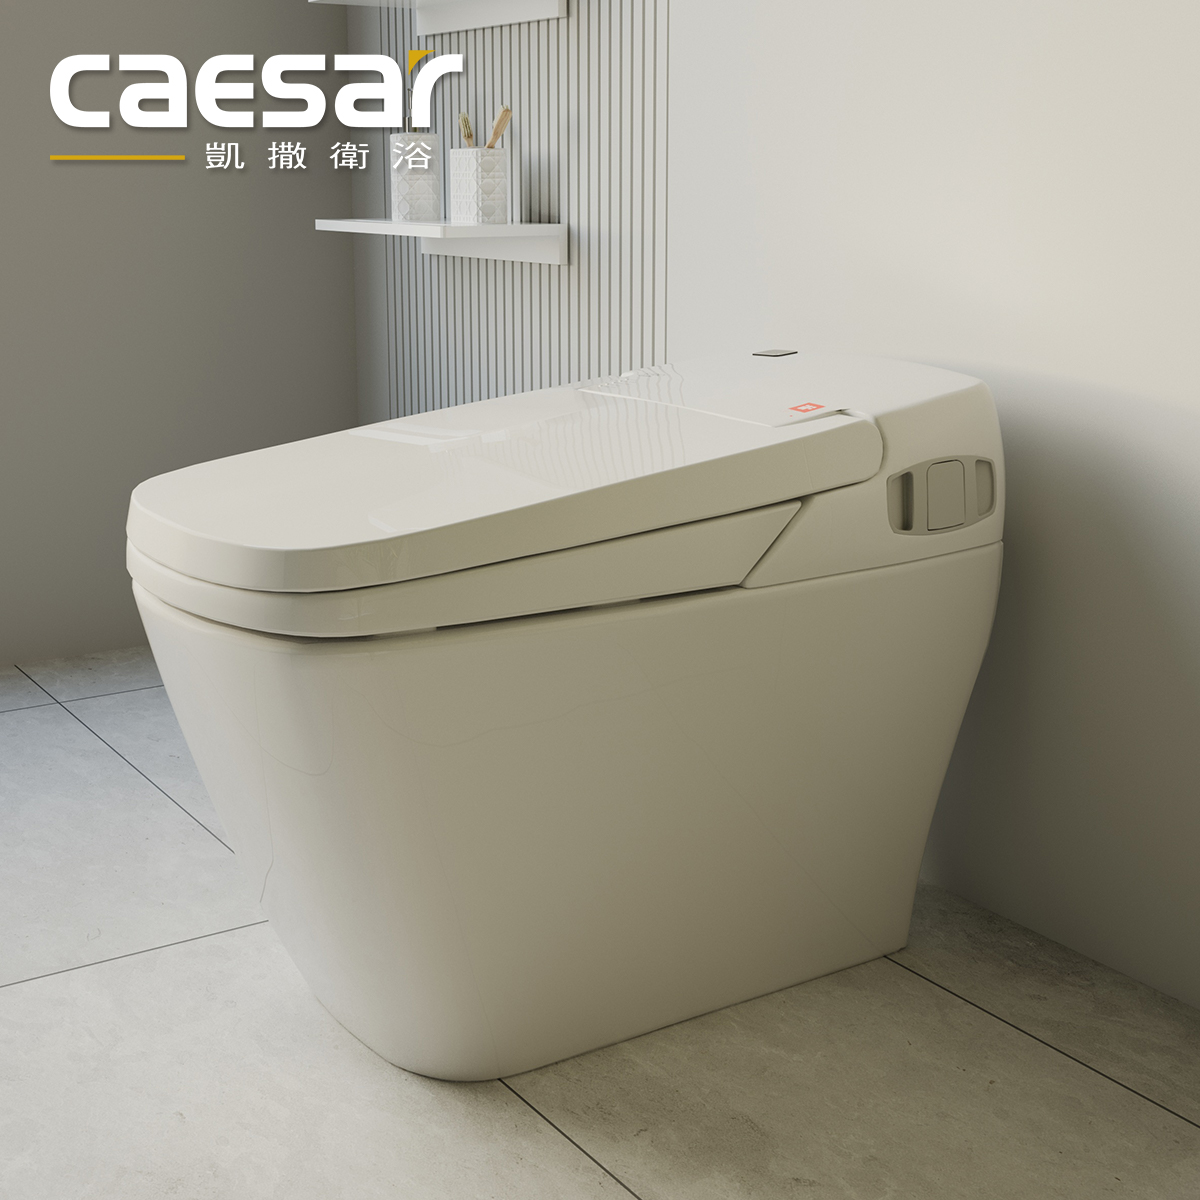 Caesar凯撒卫浴-家用一体式智能马桶龙卷冲水可调式坑距200-400mm